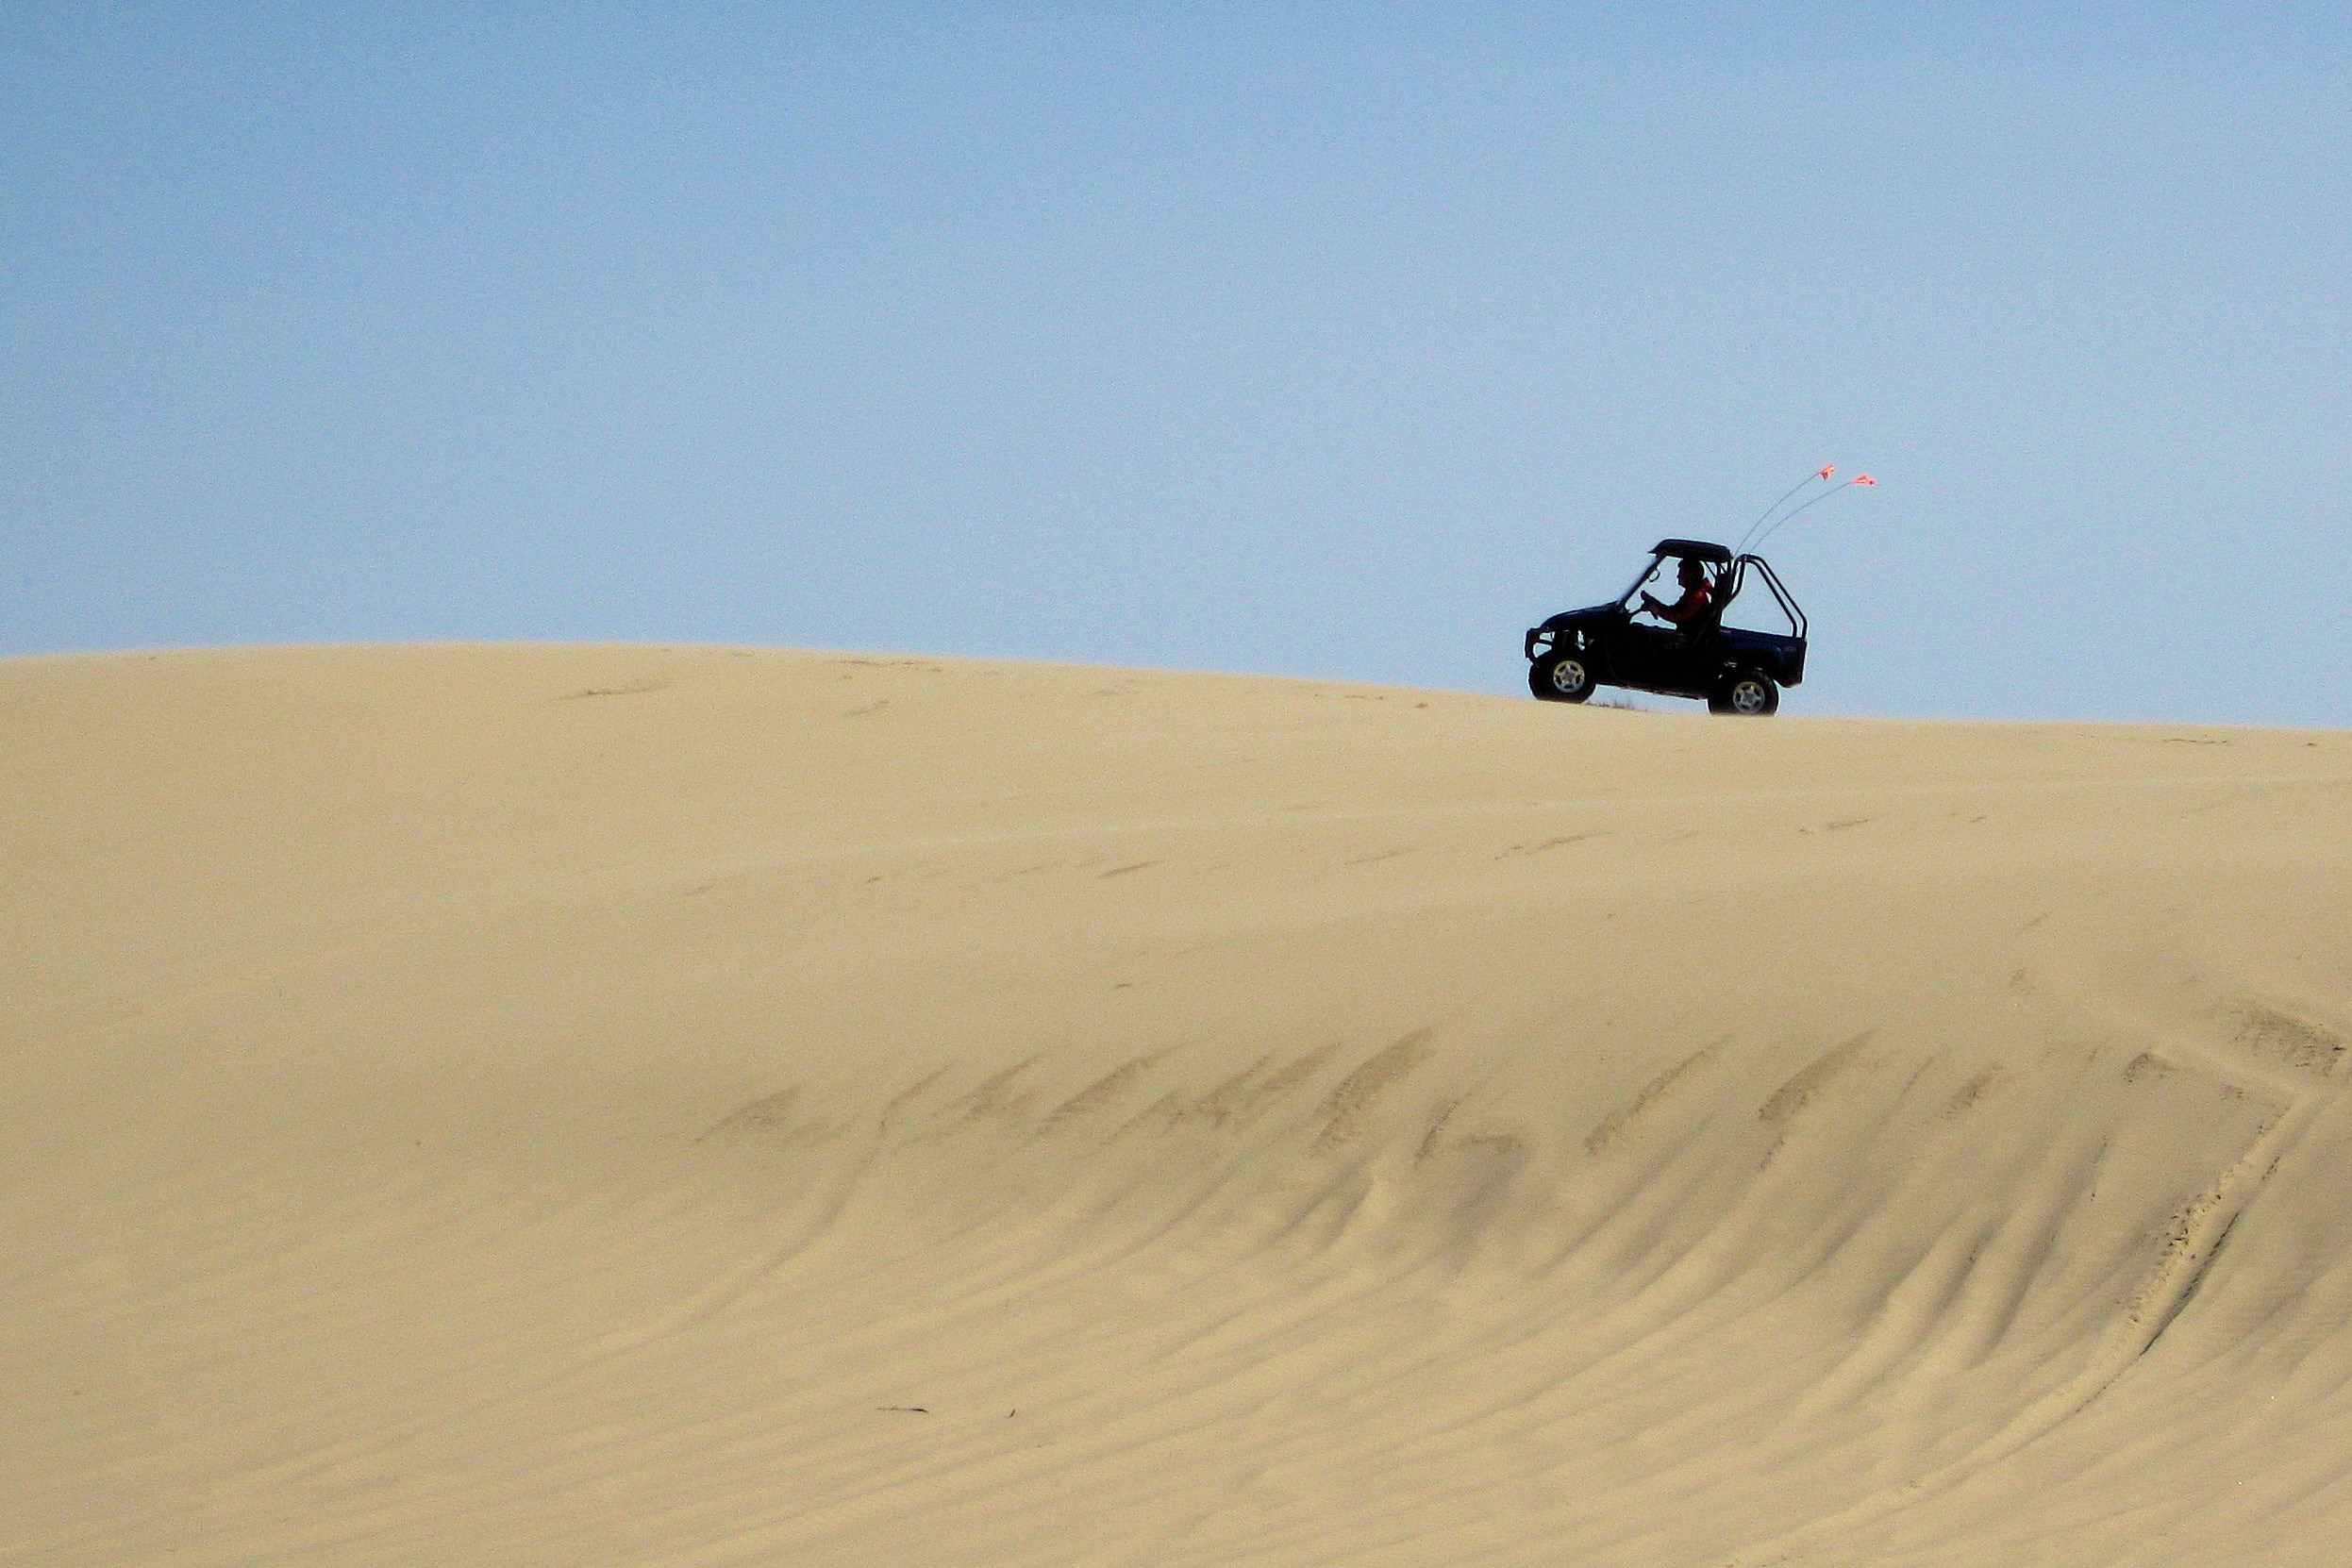 A traveler pilots a Yamaha Rhino across a sand dune in southern Oregon.